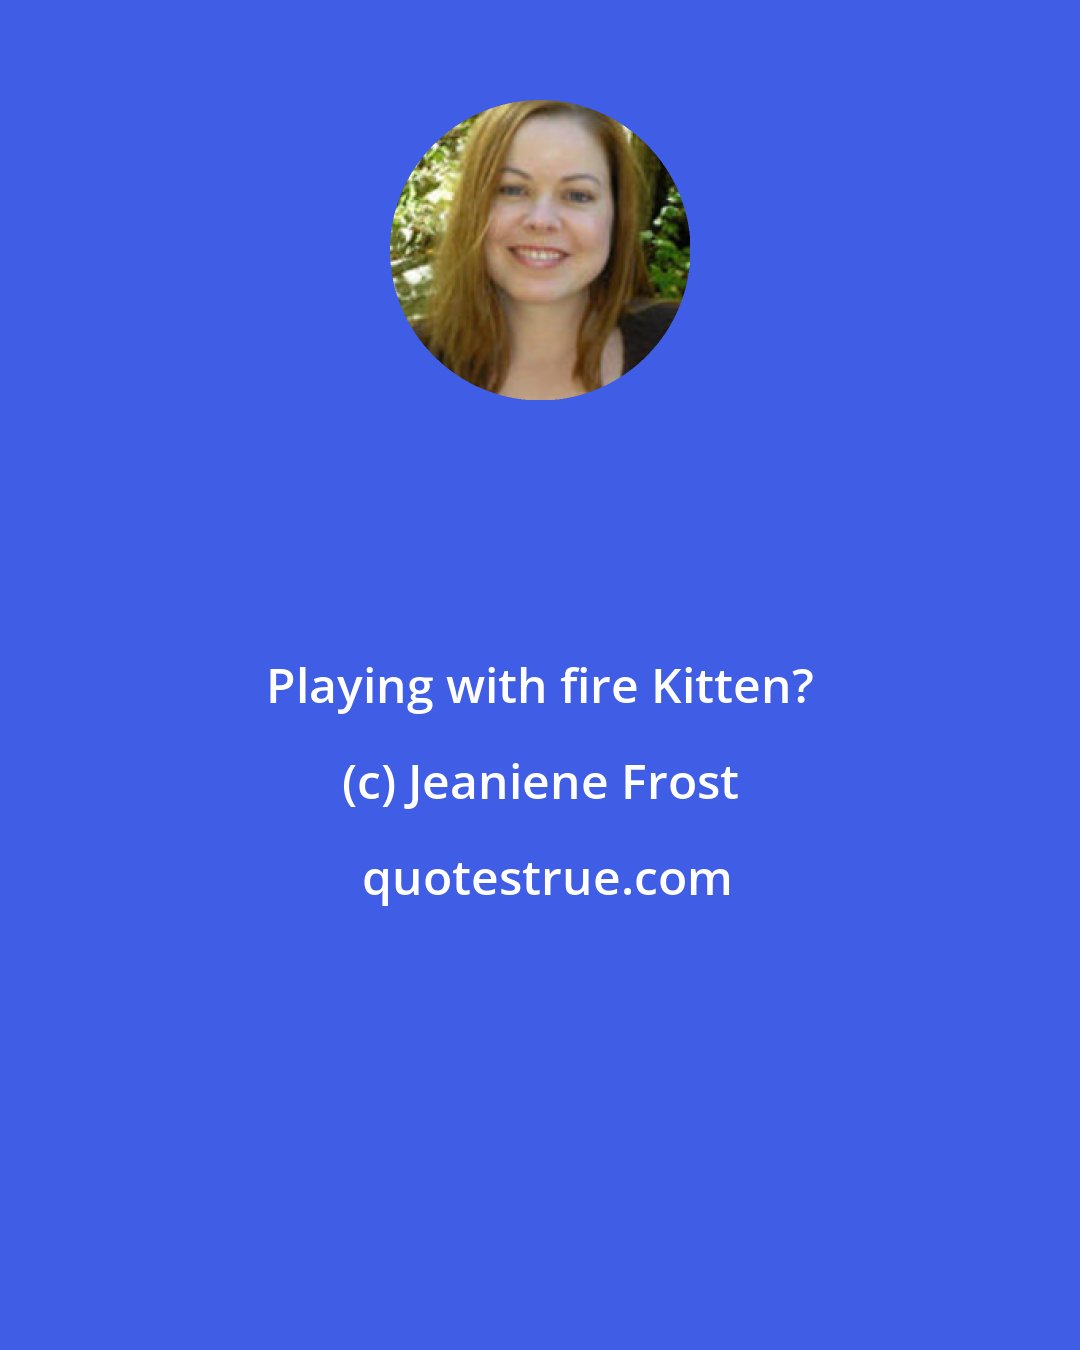 Jeaniene Frost: Playing with fire Kitten?